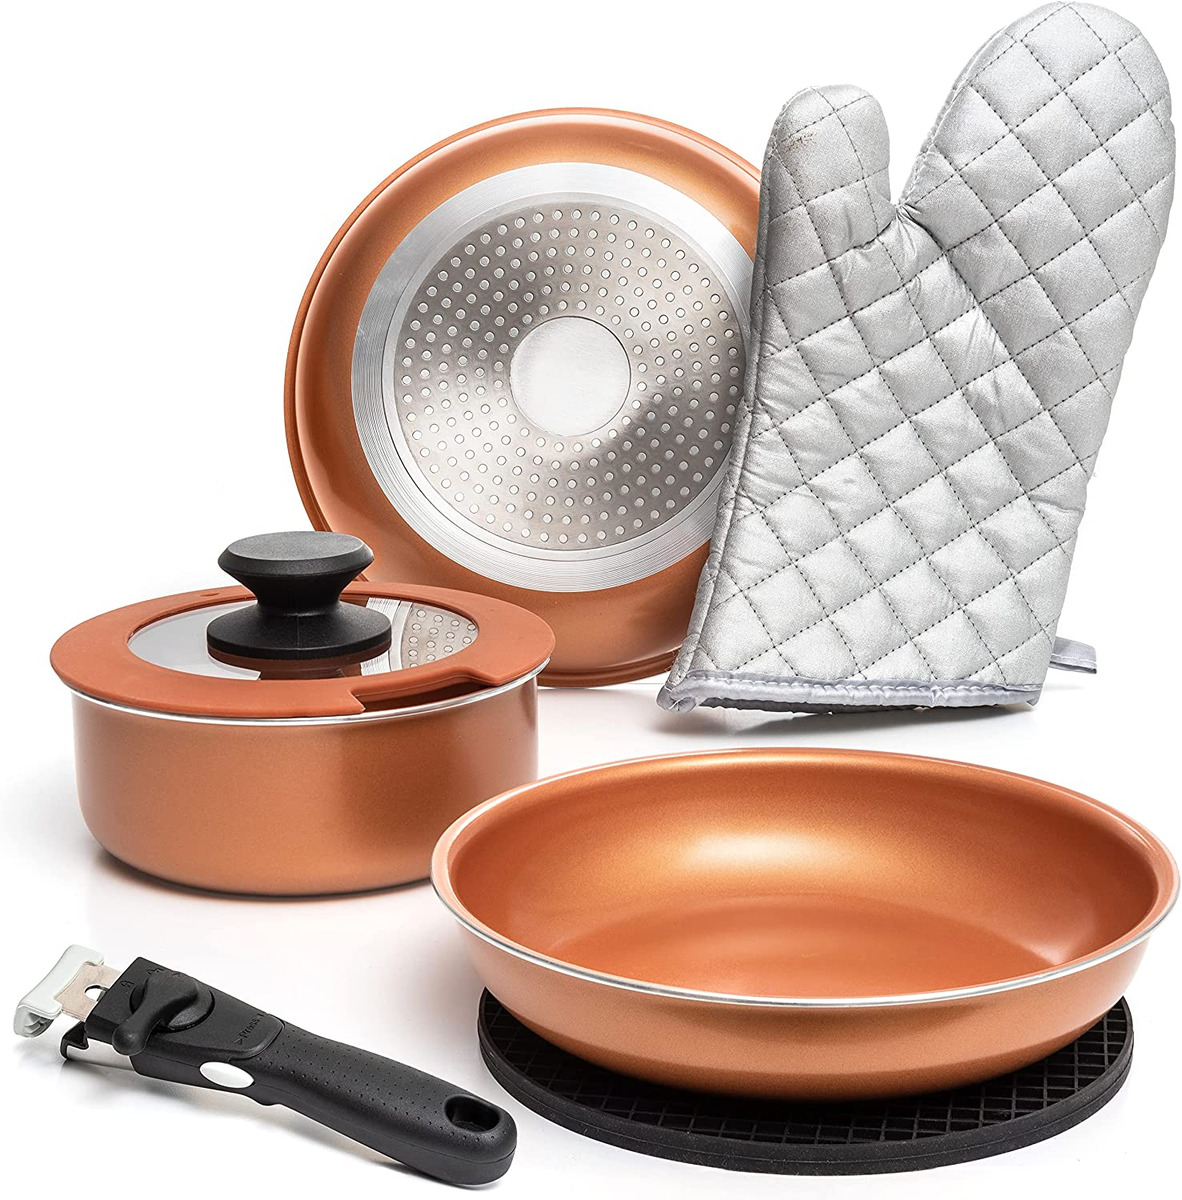 Copper Pots and Pans Set Nonstick, Removable Handle Cookware, Stackable Pots  and